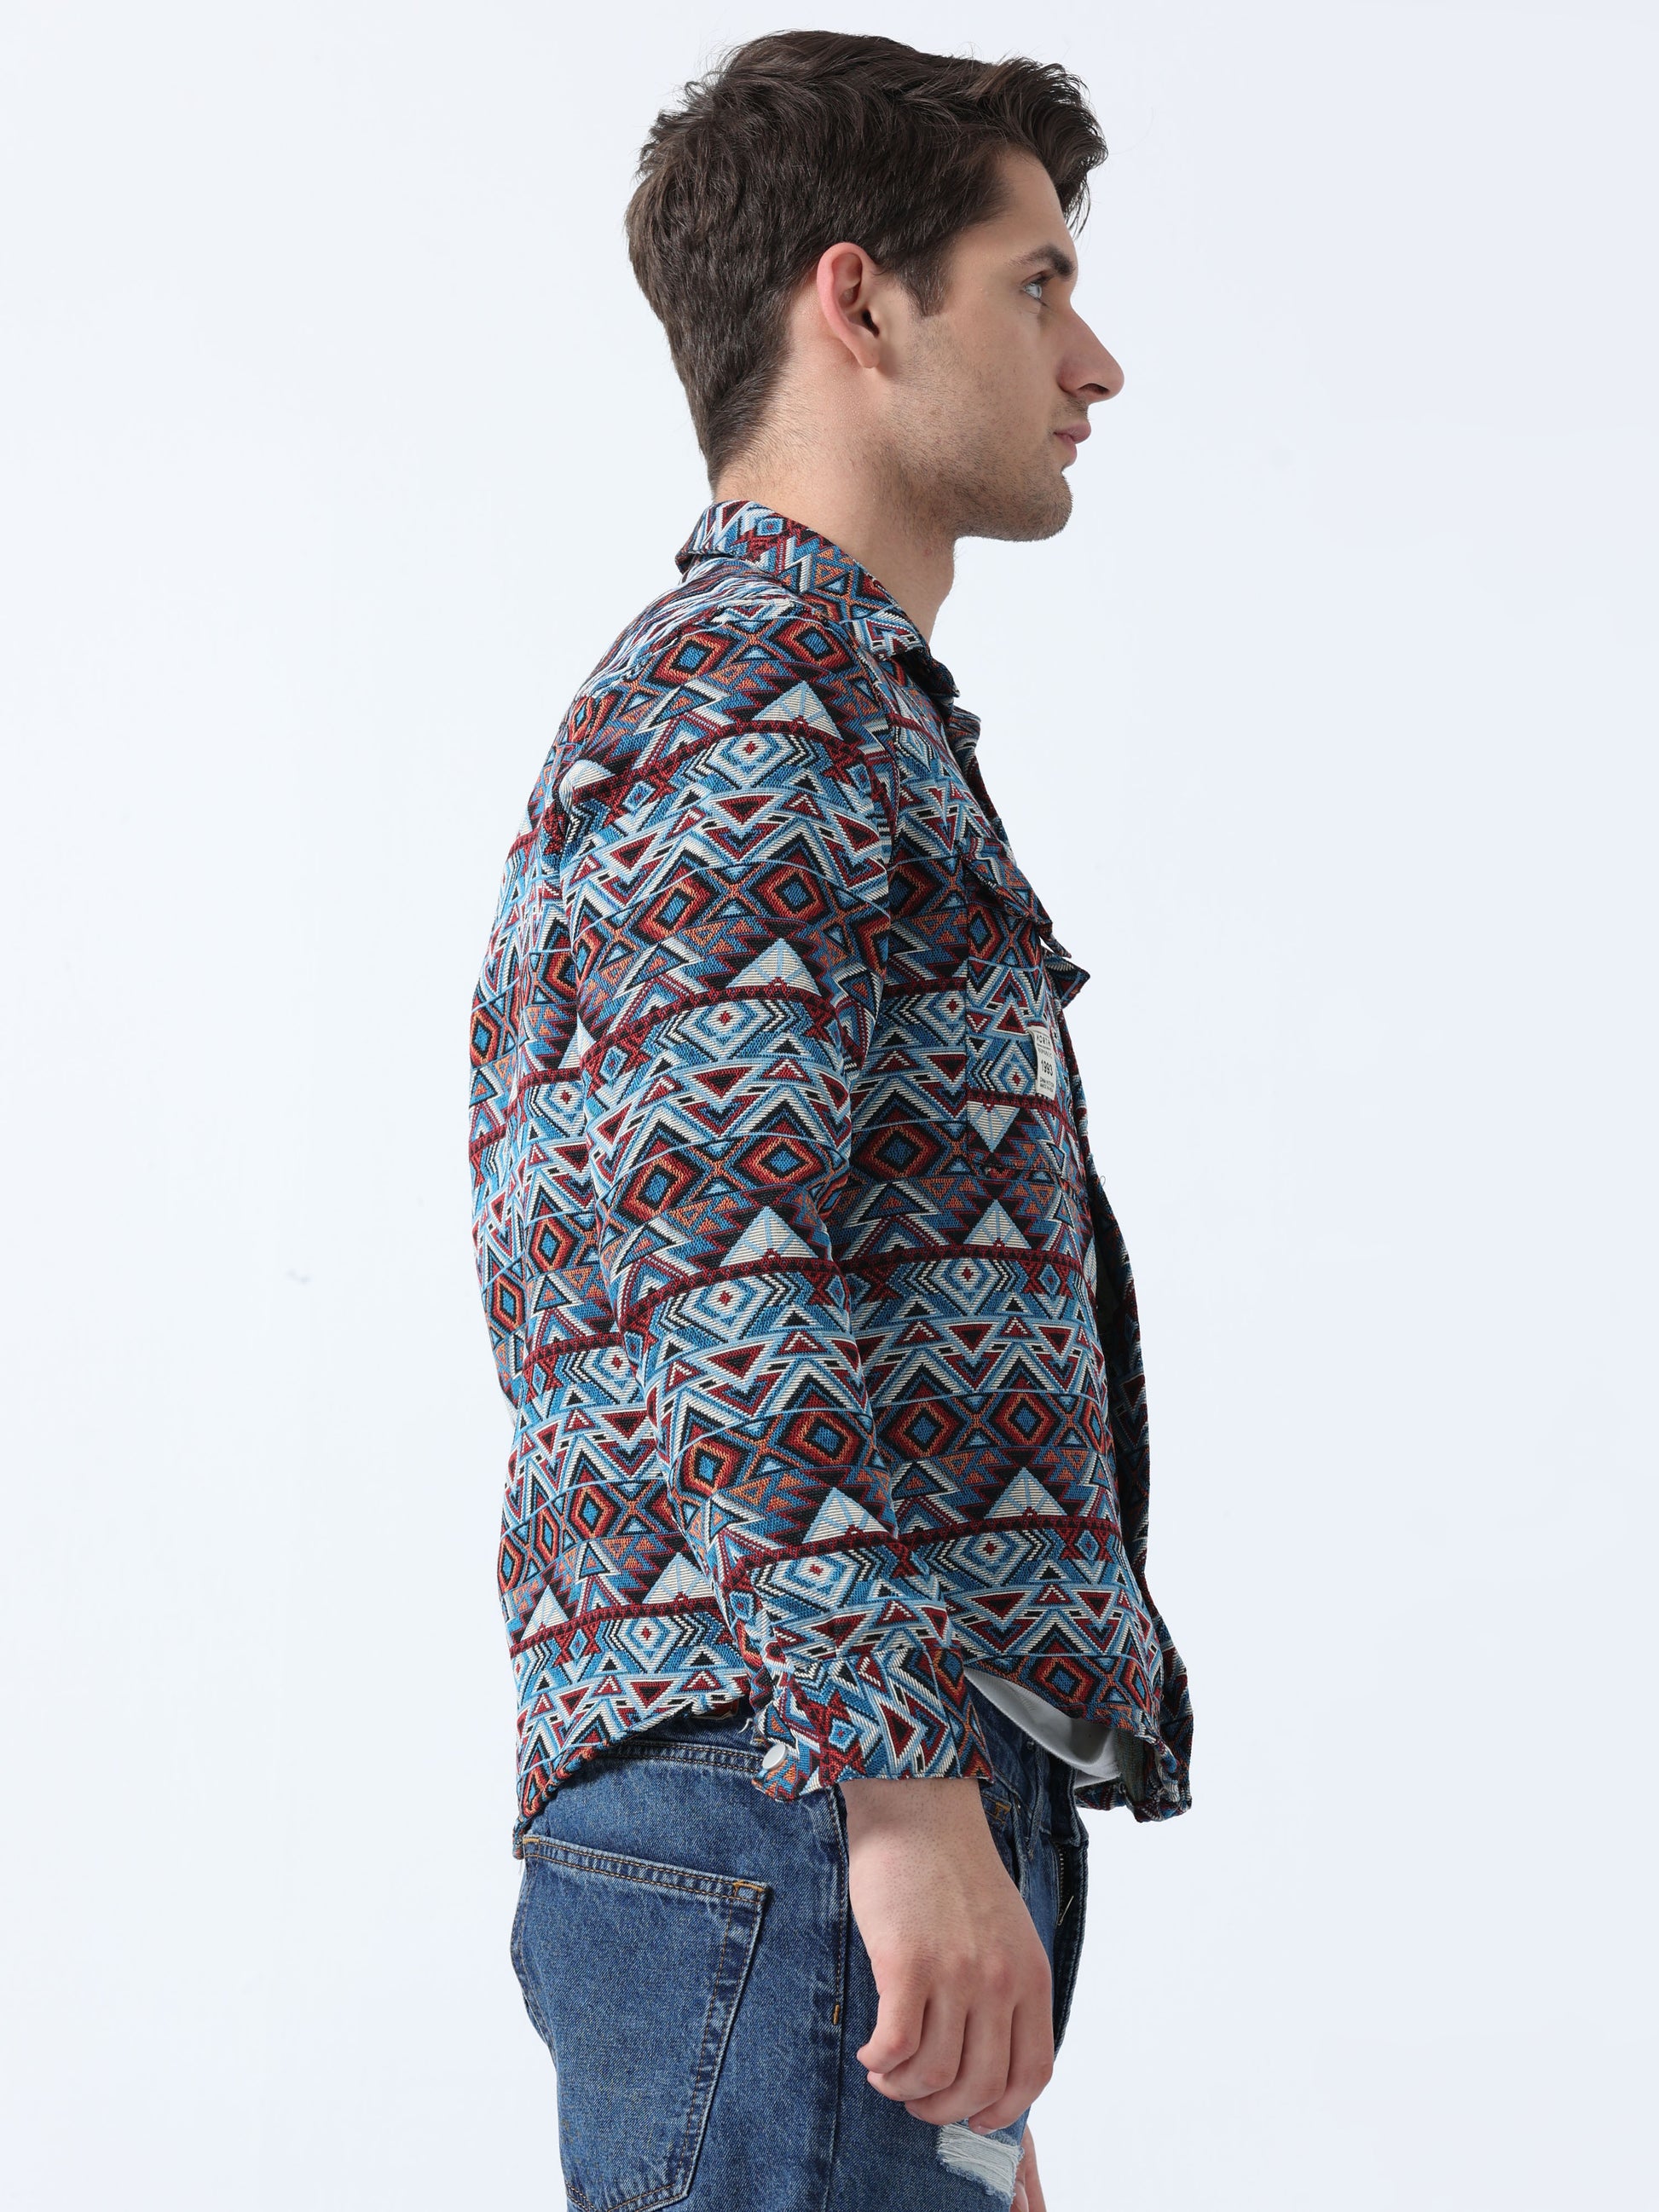 Blue Imported Fabric Tribe Printed Jacquard Shirt